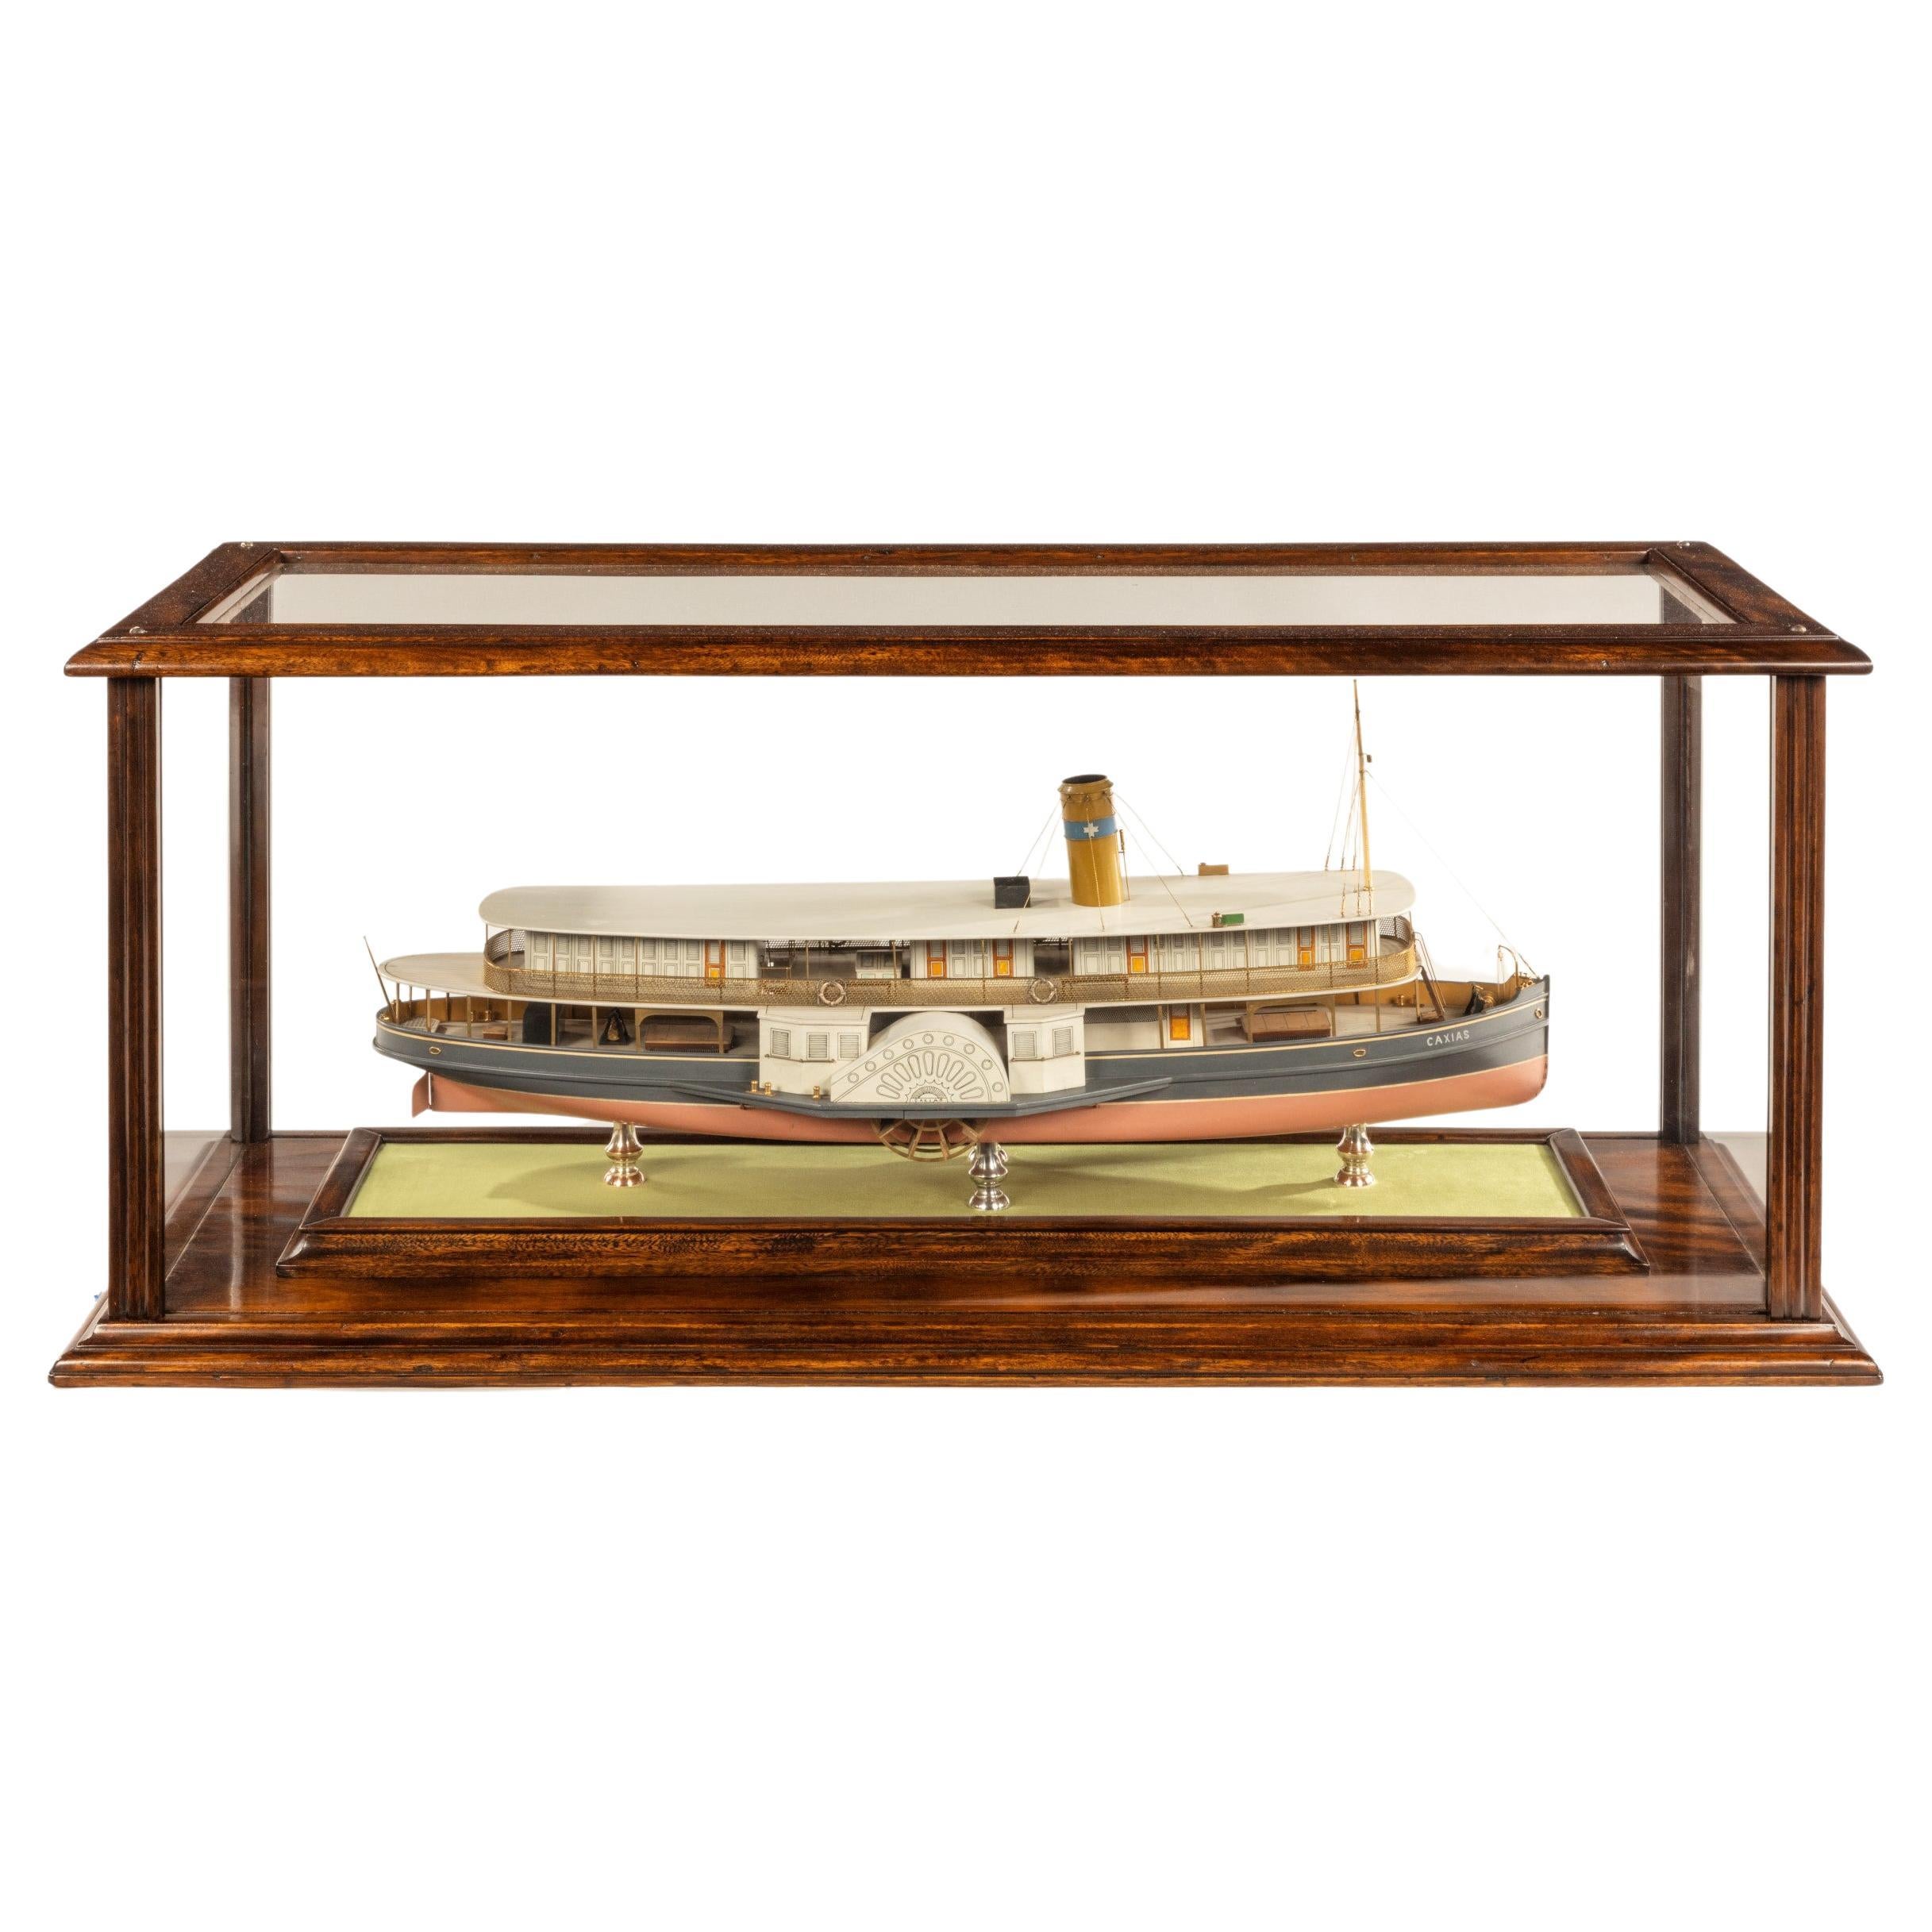 Builder’s Model of the Brazilian Passenger Paddle Steamer Caxias For Sale